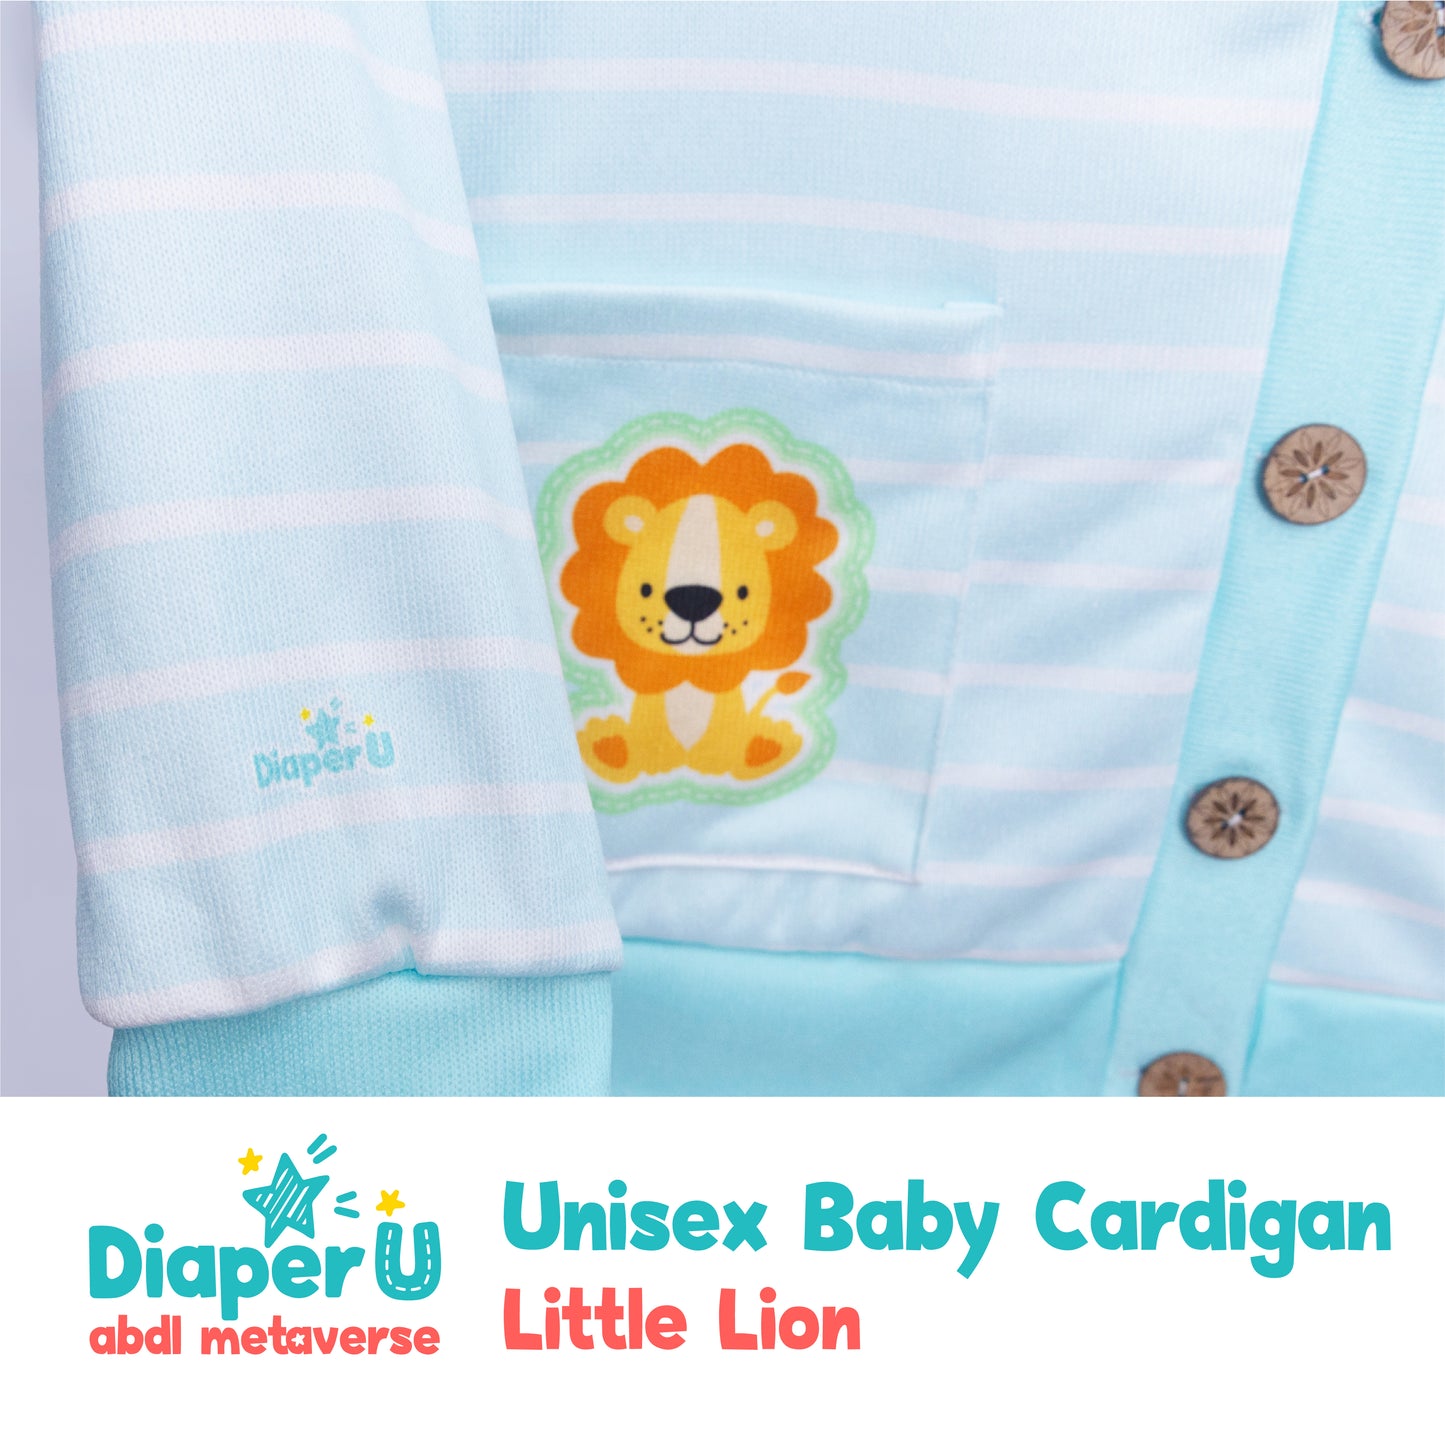 Unisex Baby Cardigan - Little Lion